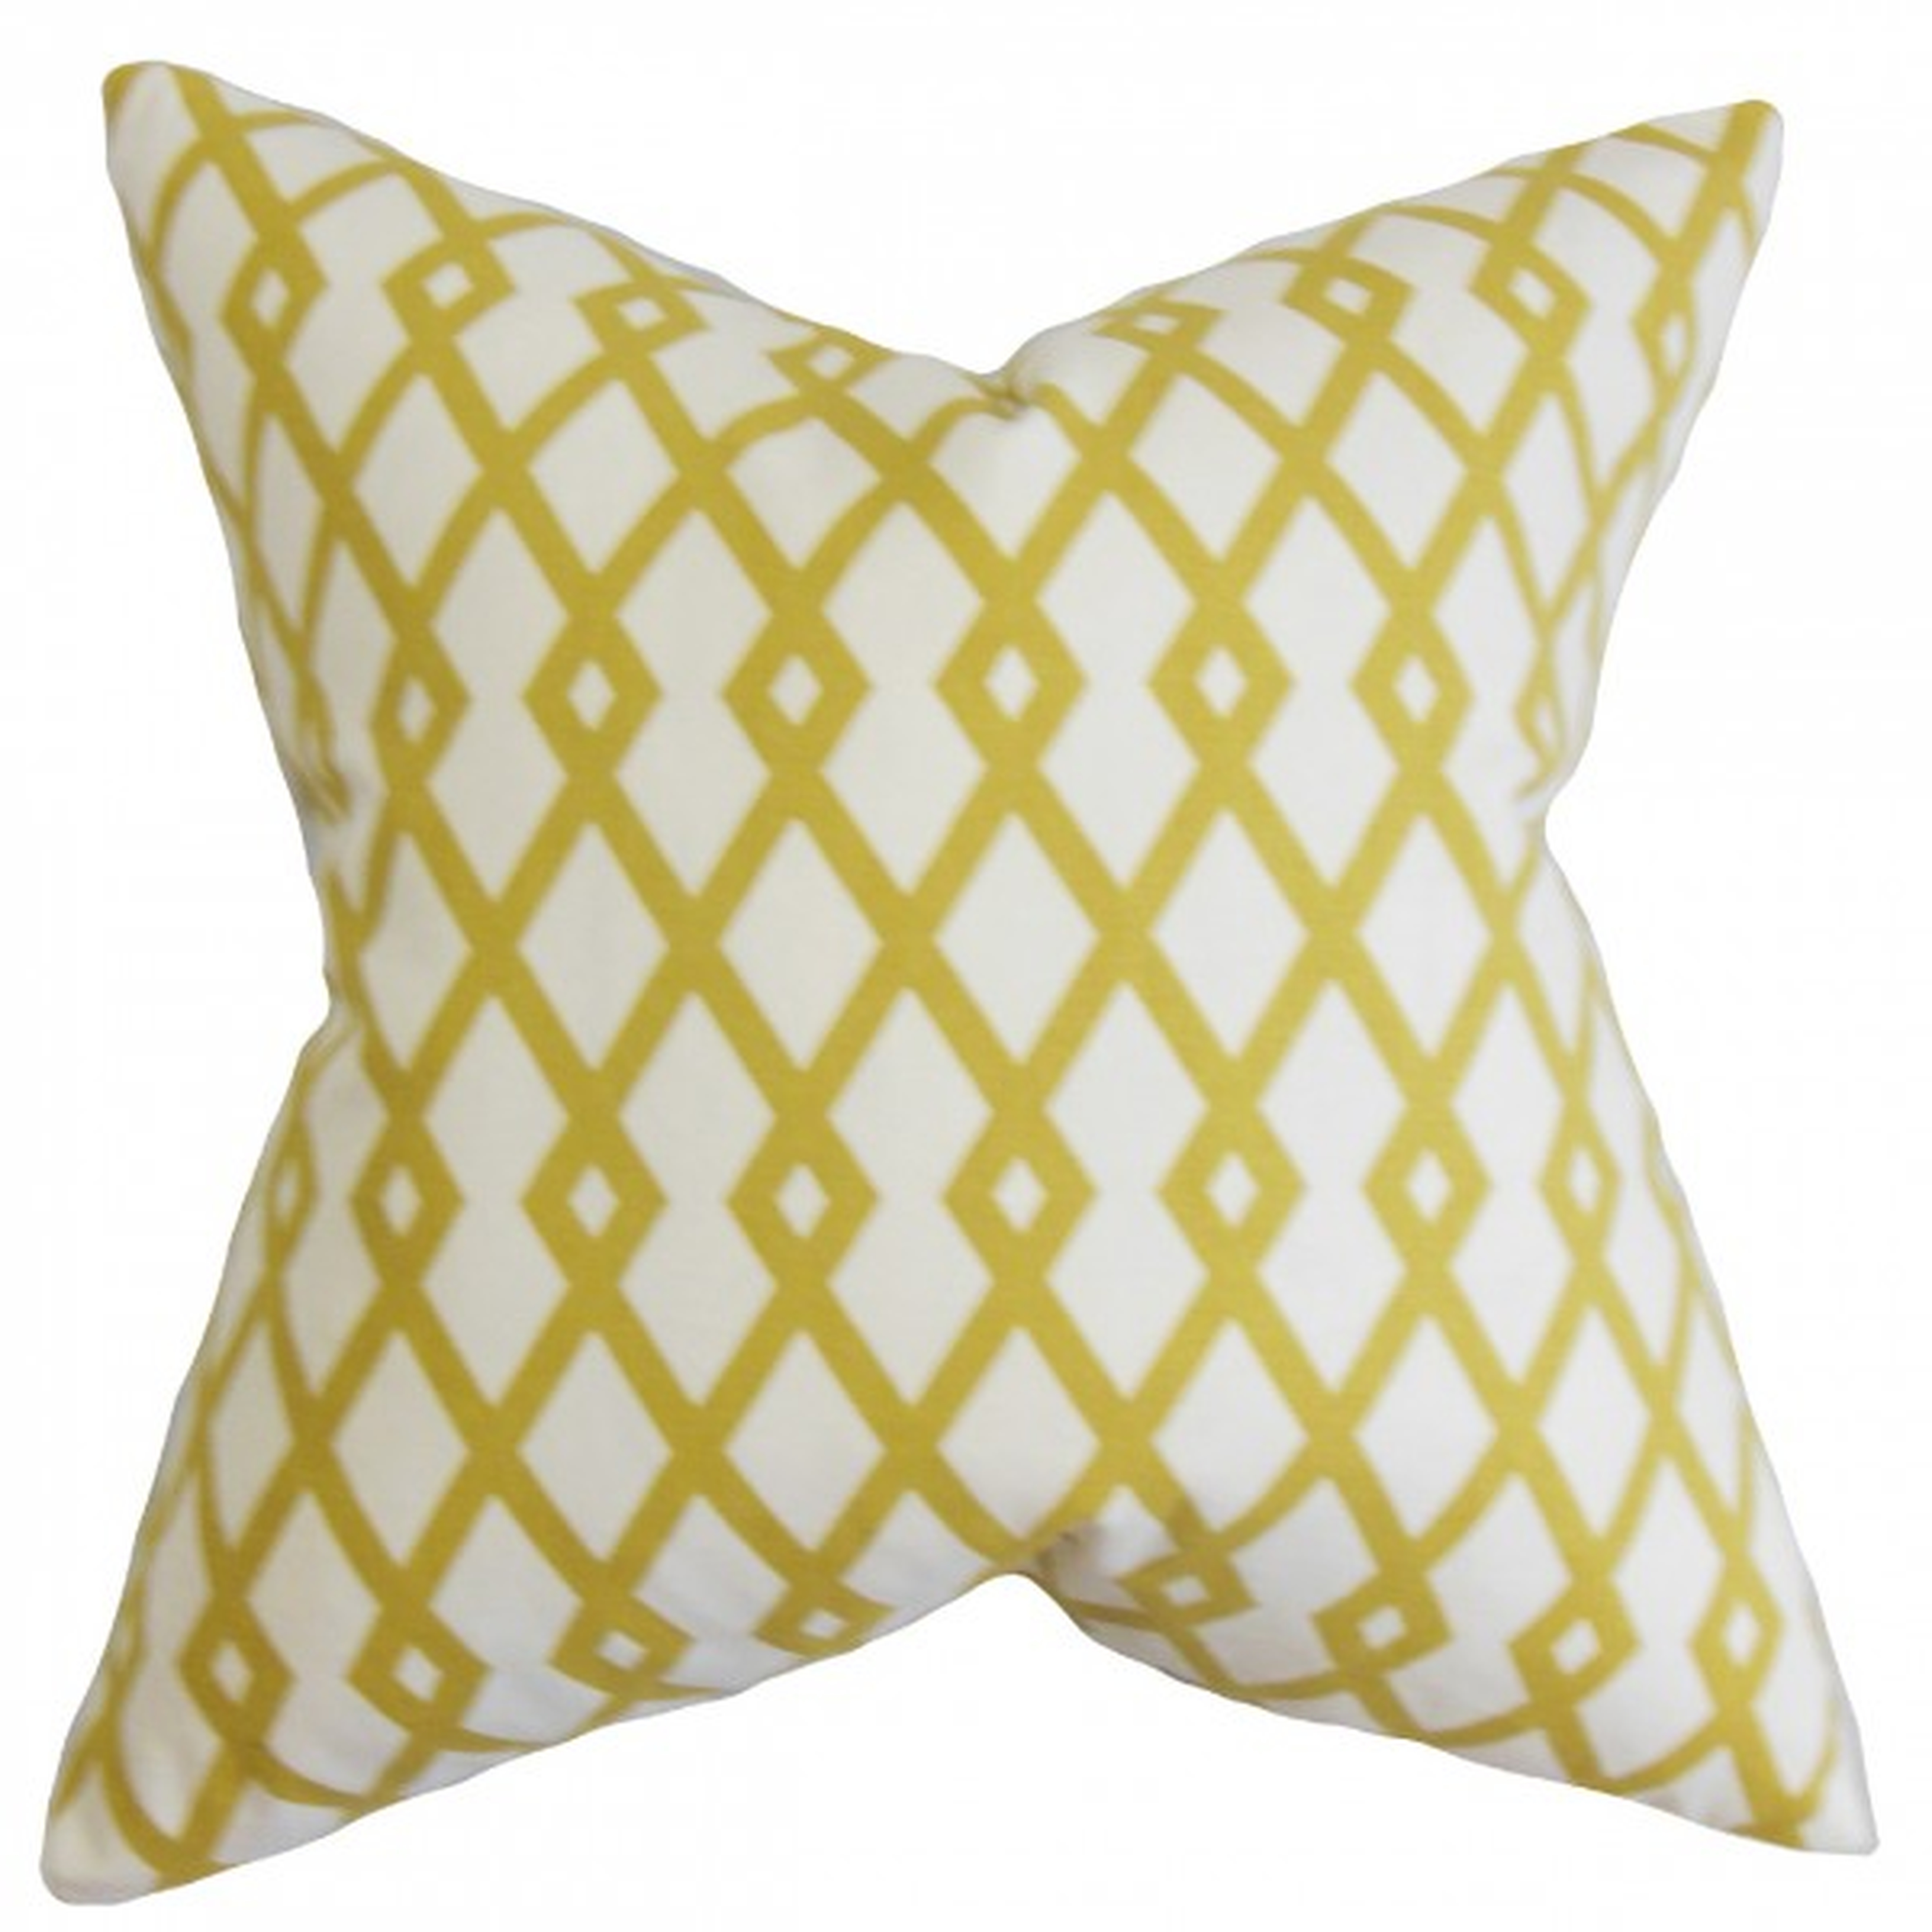 Tova Geometric Pillow Yellow - 18" x 18" - Down Insert - Linen & Seam